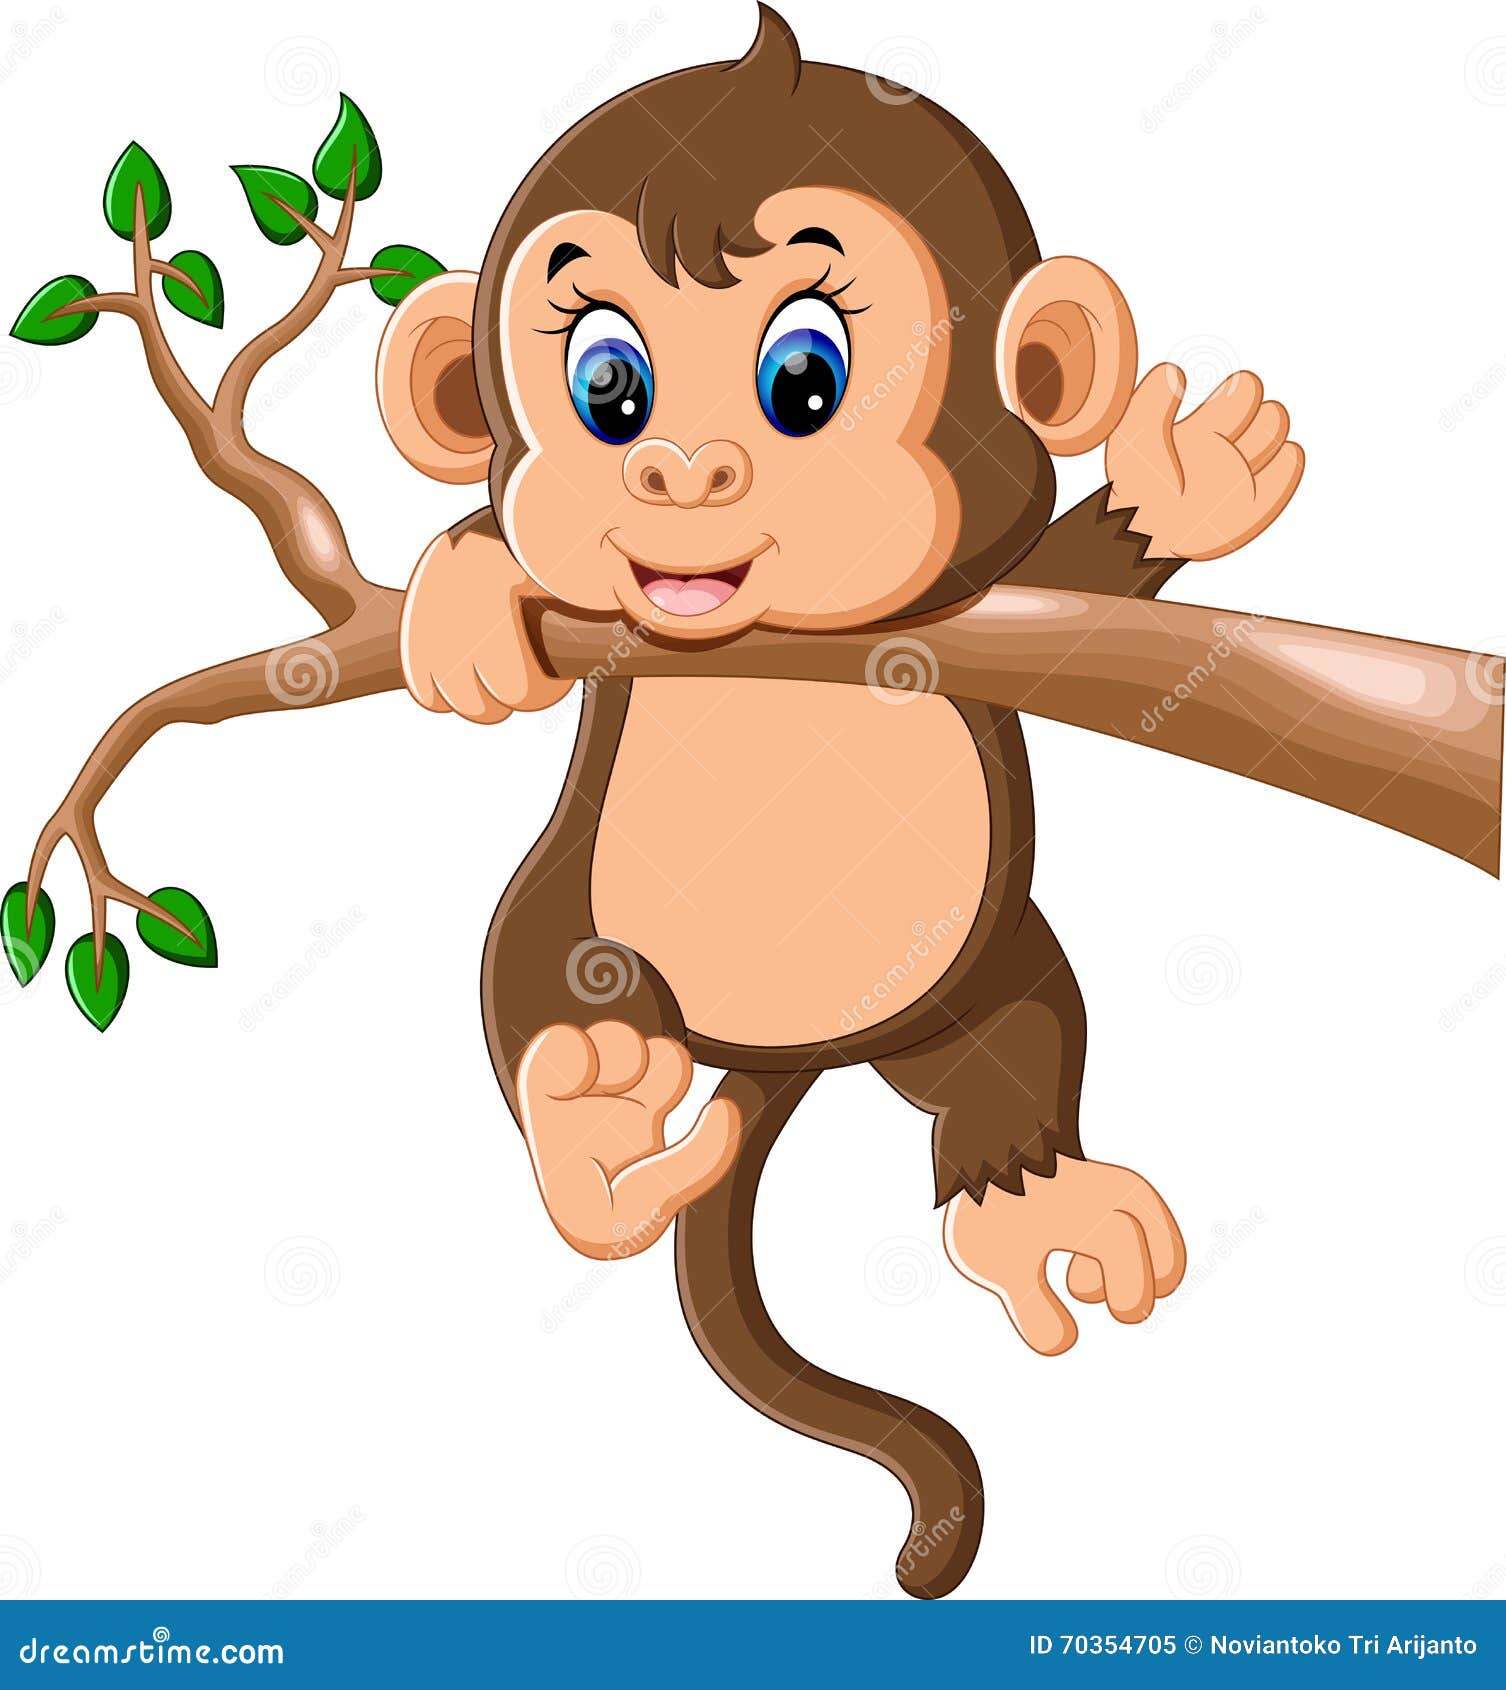 Cute baby monkey cartoon stock vector. Illustration of mammal - 70354705